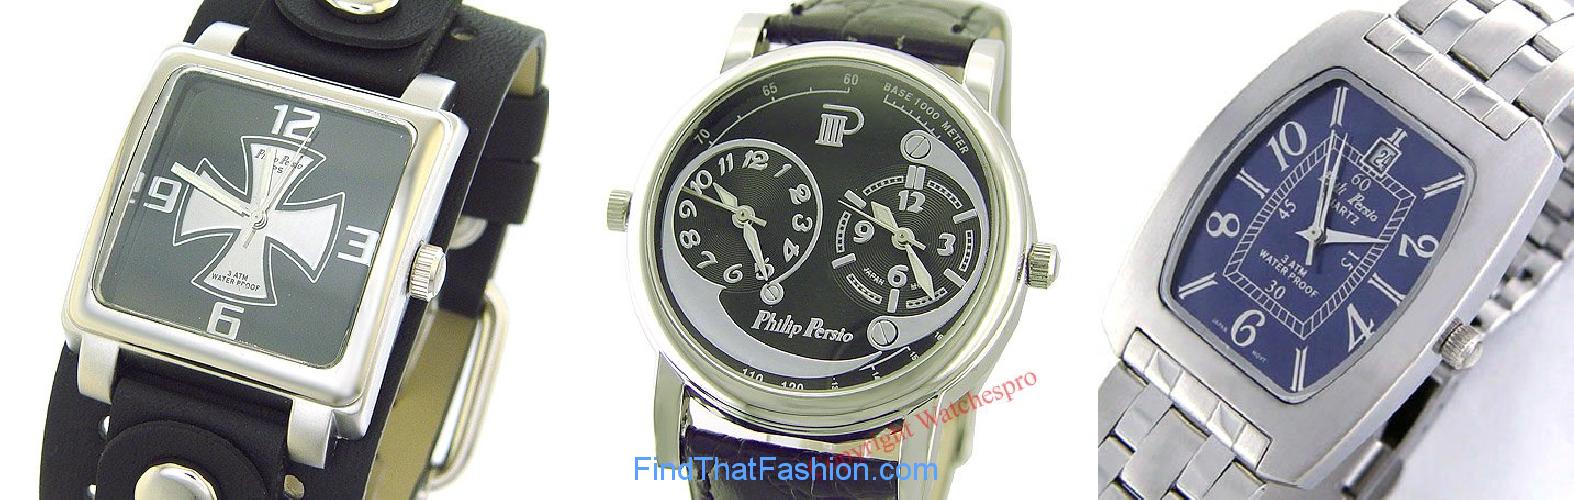 Philip Persio Watches